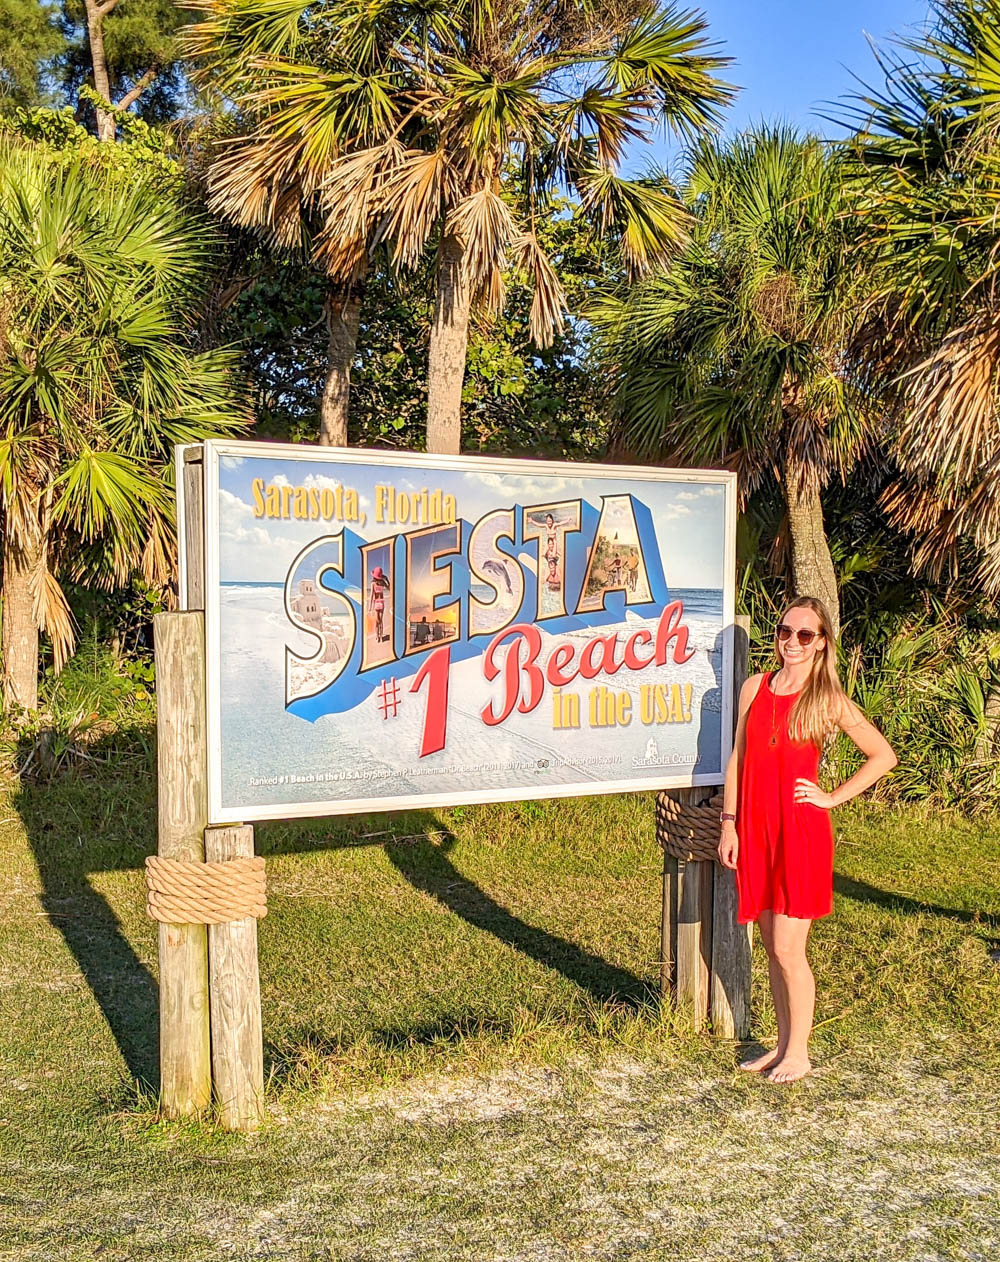 Siesta Key Beach / 3 days in Sarasota, Florida / What to do in Sarasota, Where to eat in Sarasota, itinerary and information guide, Siesta Key Beach, #1 beach in America